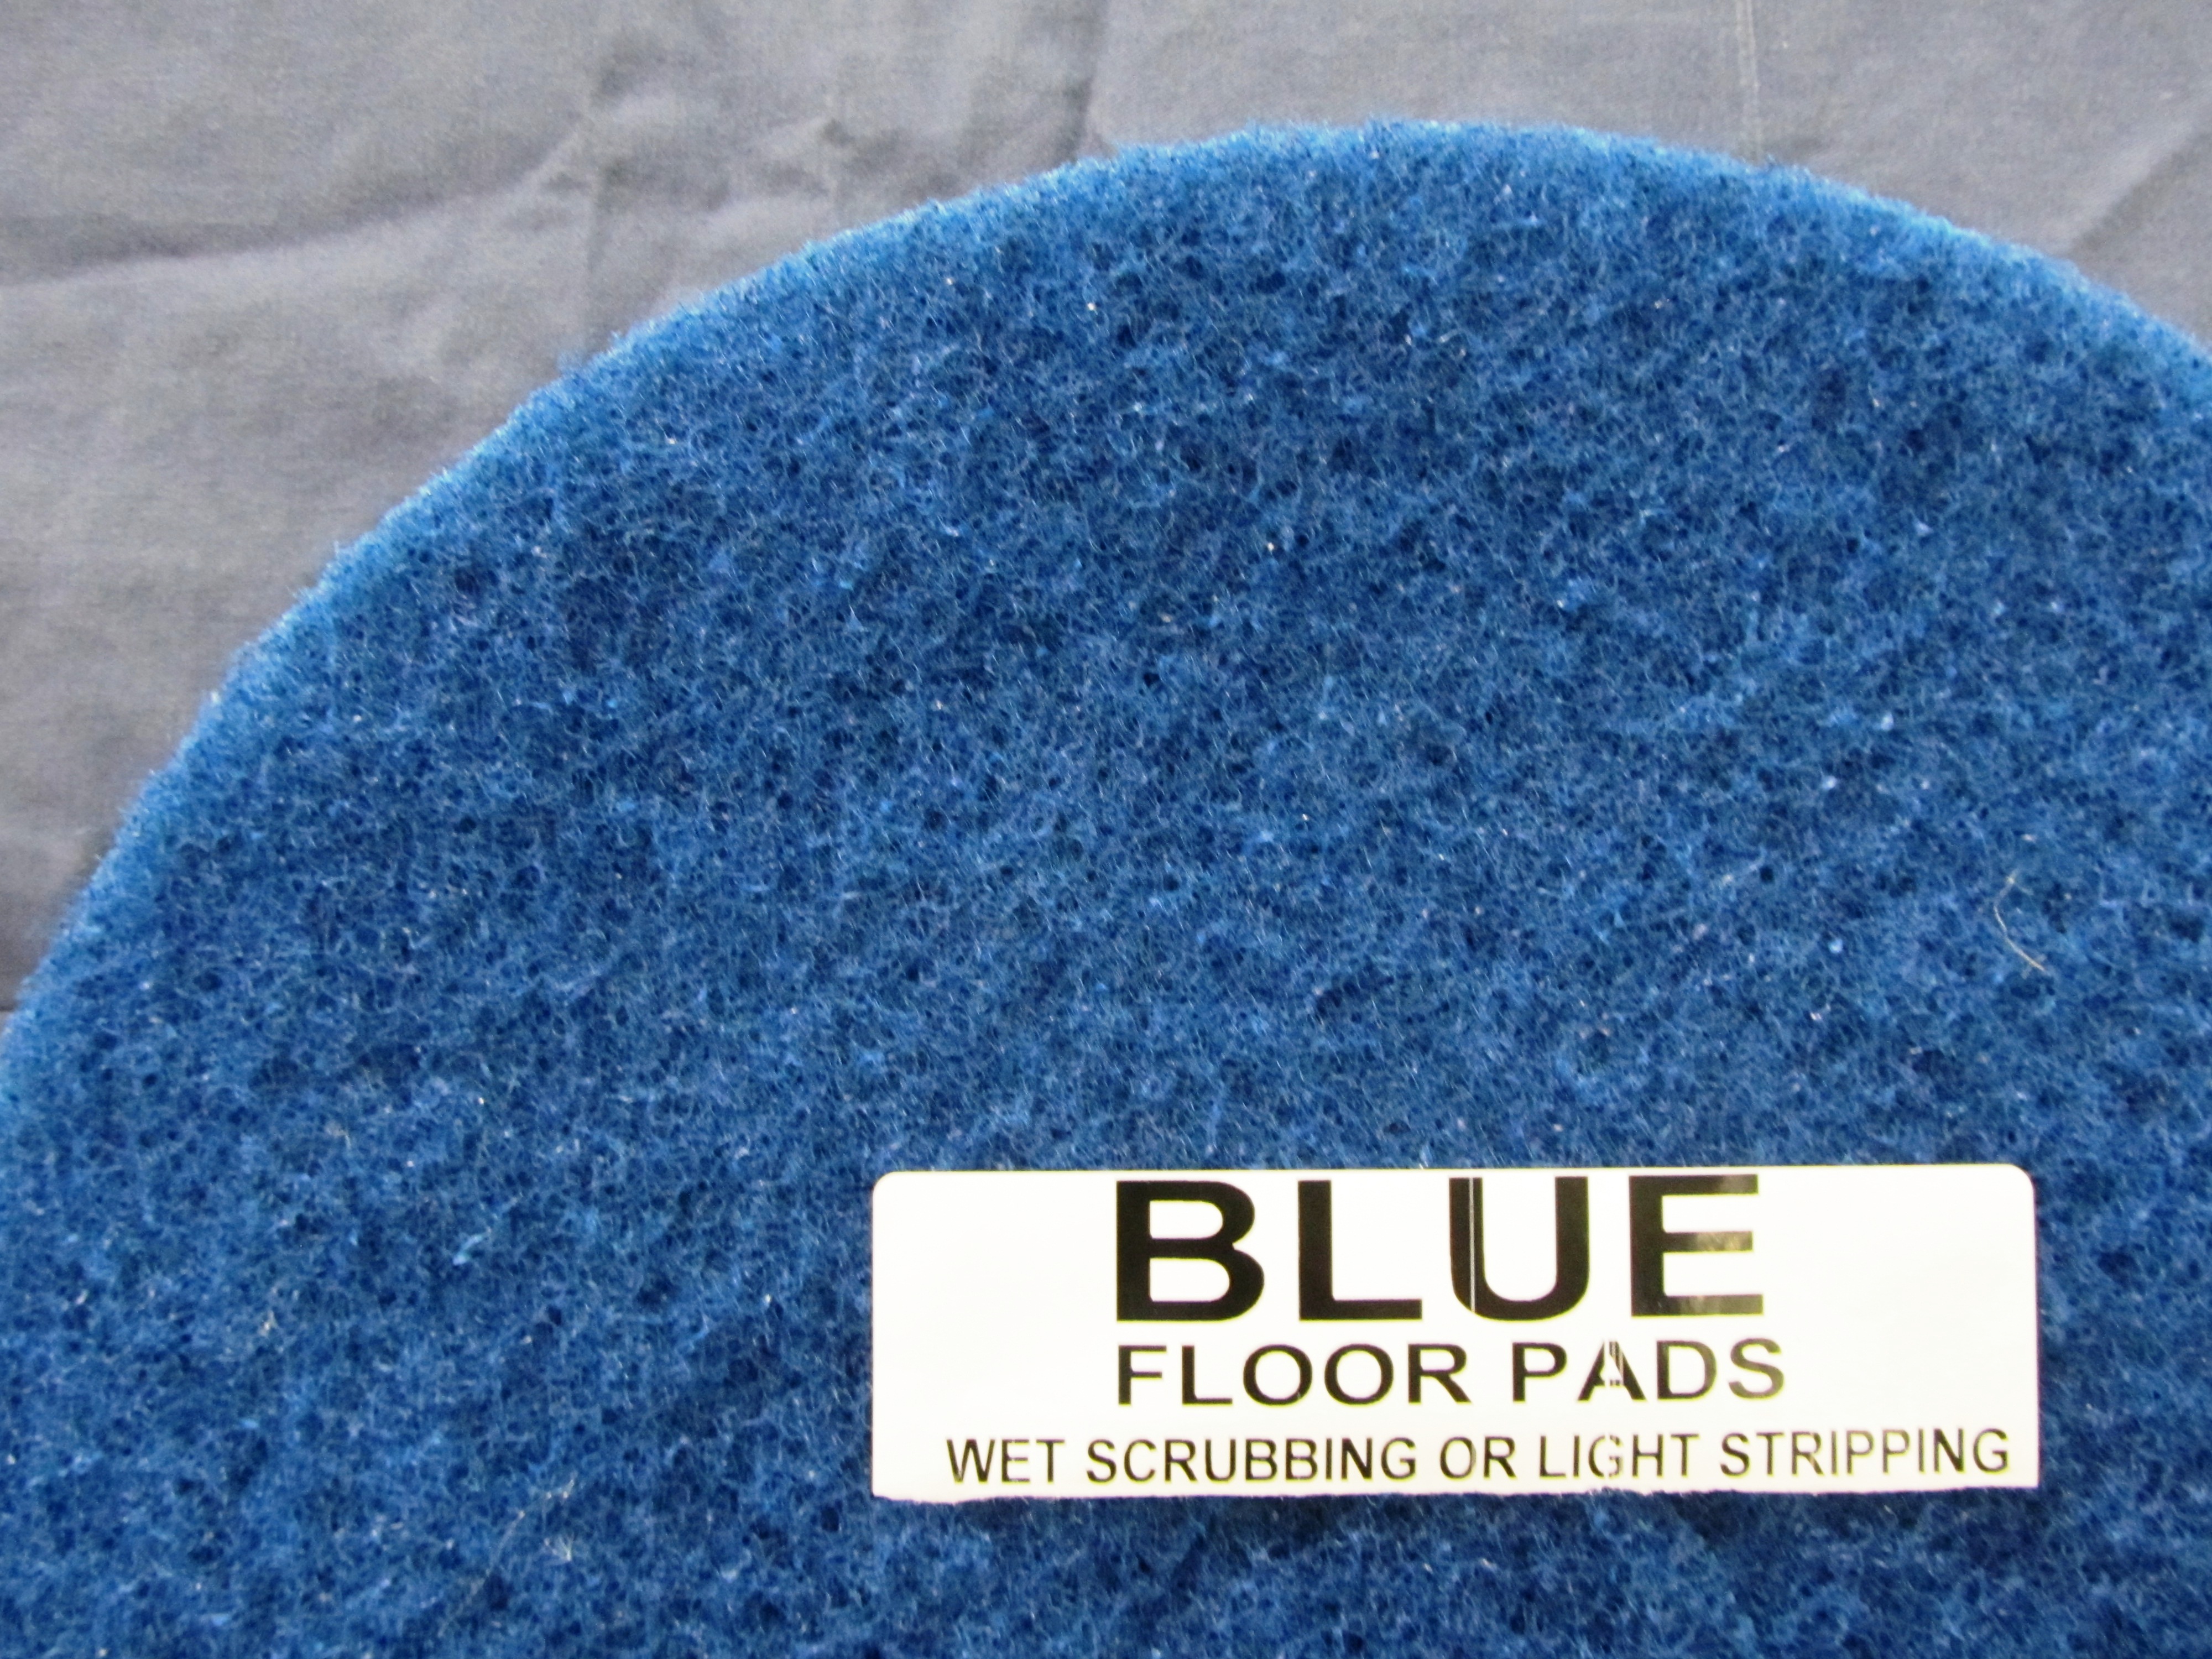 top half of blue floor pad, label displayed